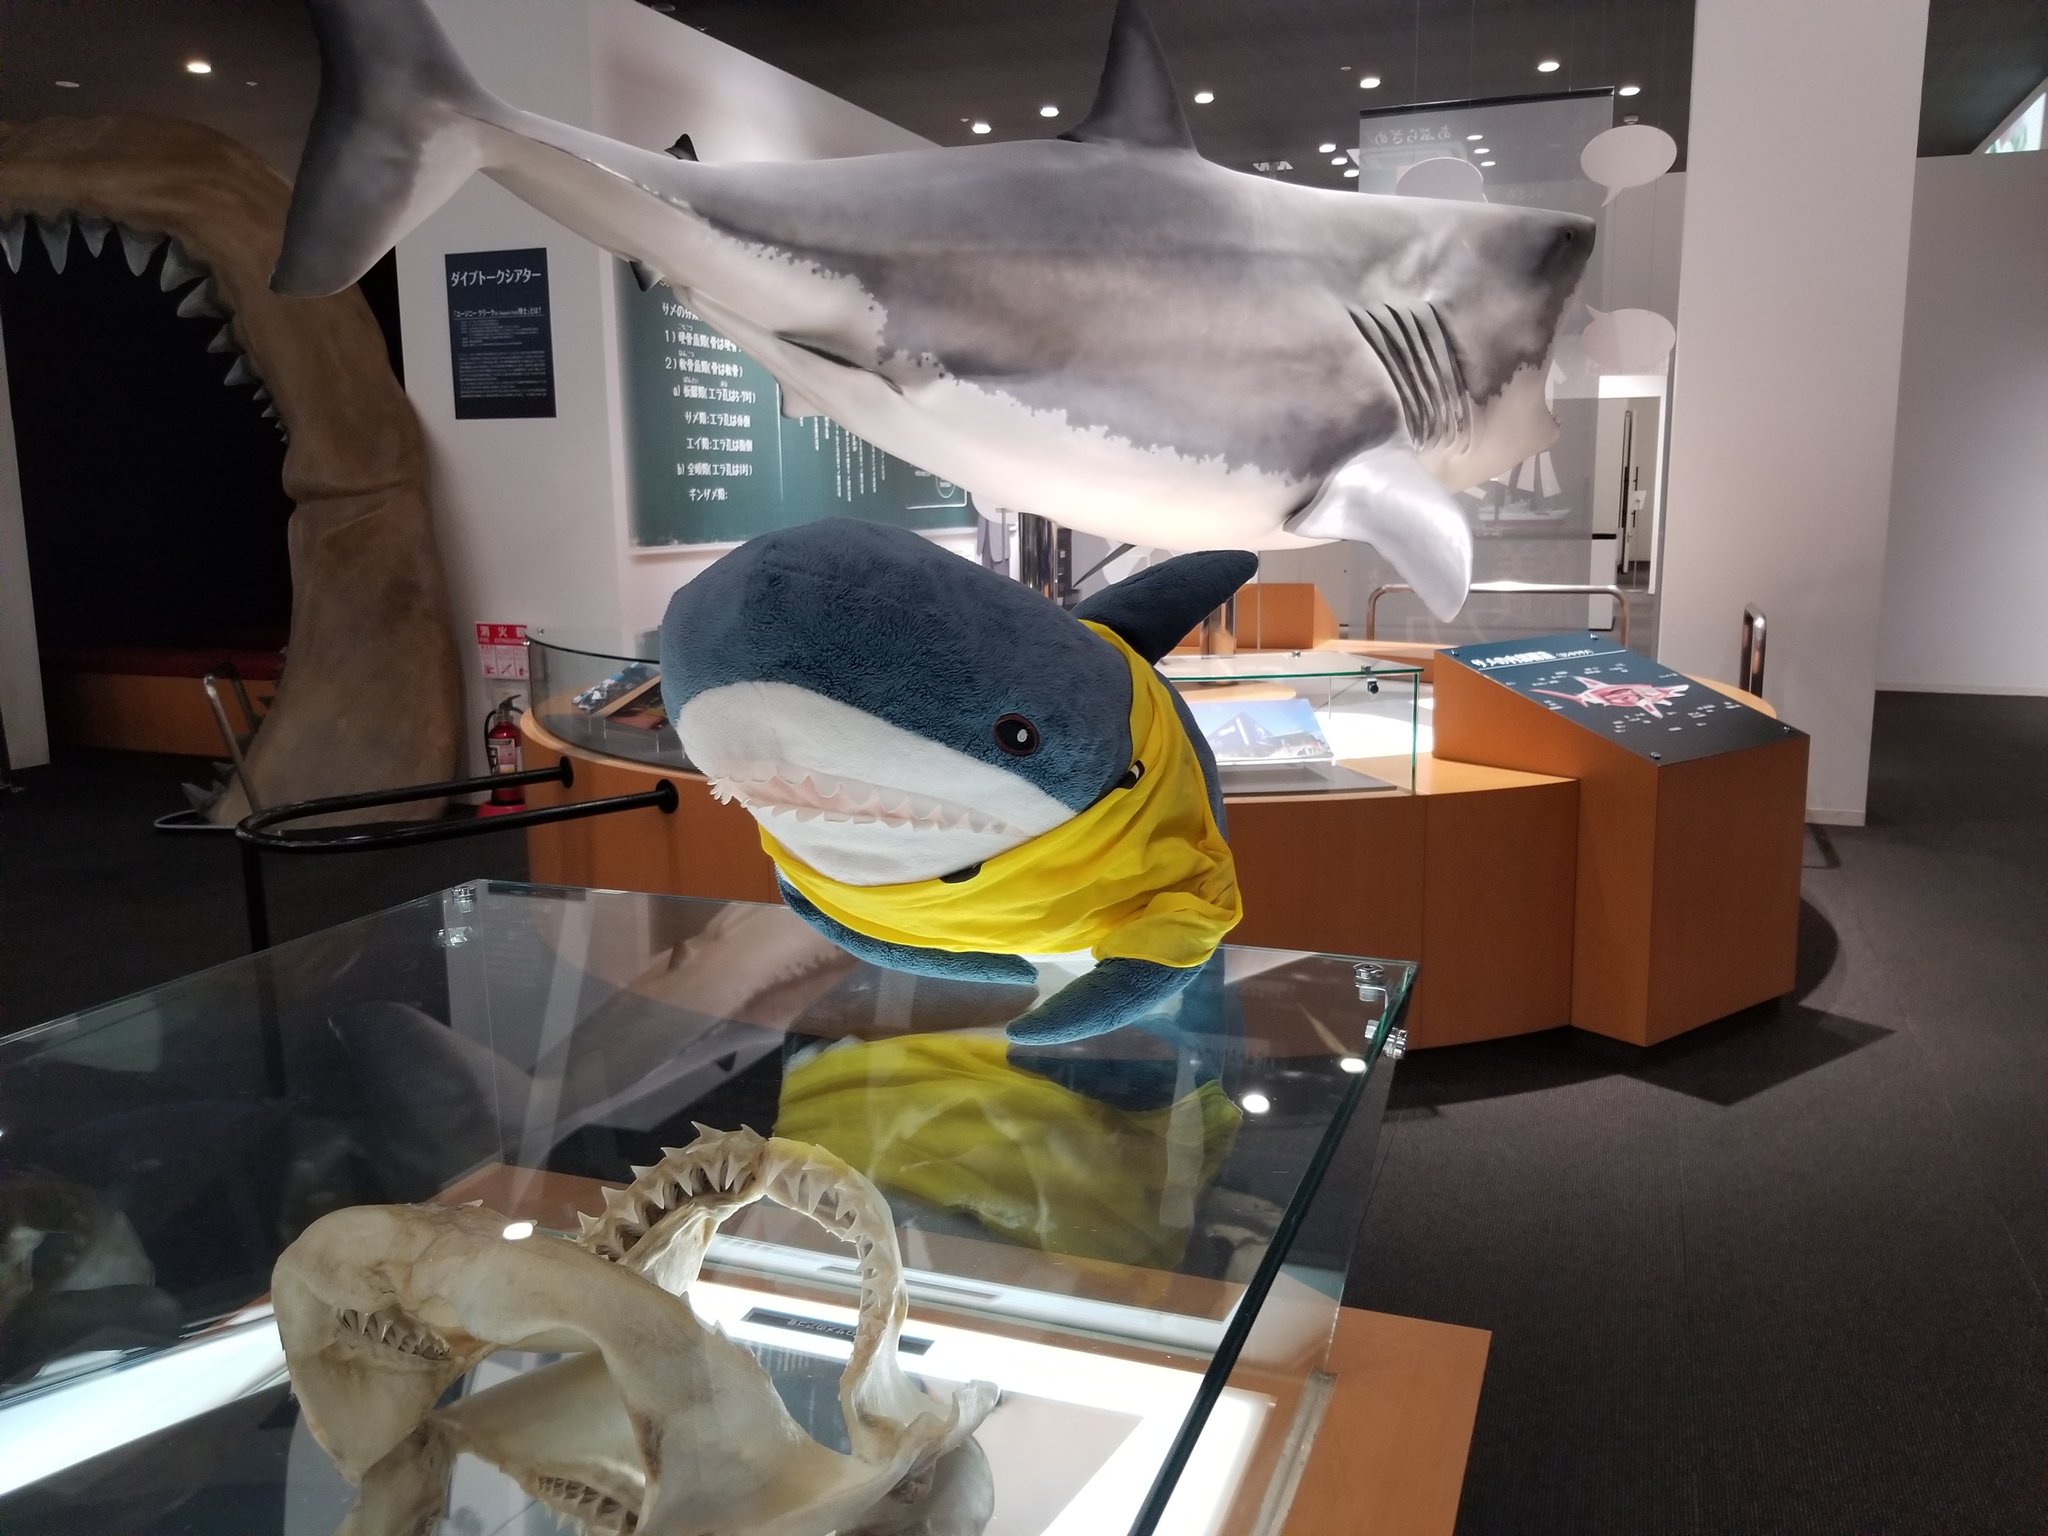 Ikeaのサメ用アカ ワタザメ サメの博物館 ｑサメより怖いのは何 ワタザメ サメだあ T Co Cigdawacqo Twitter